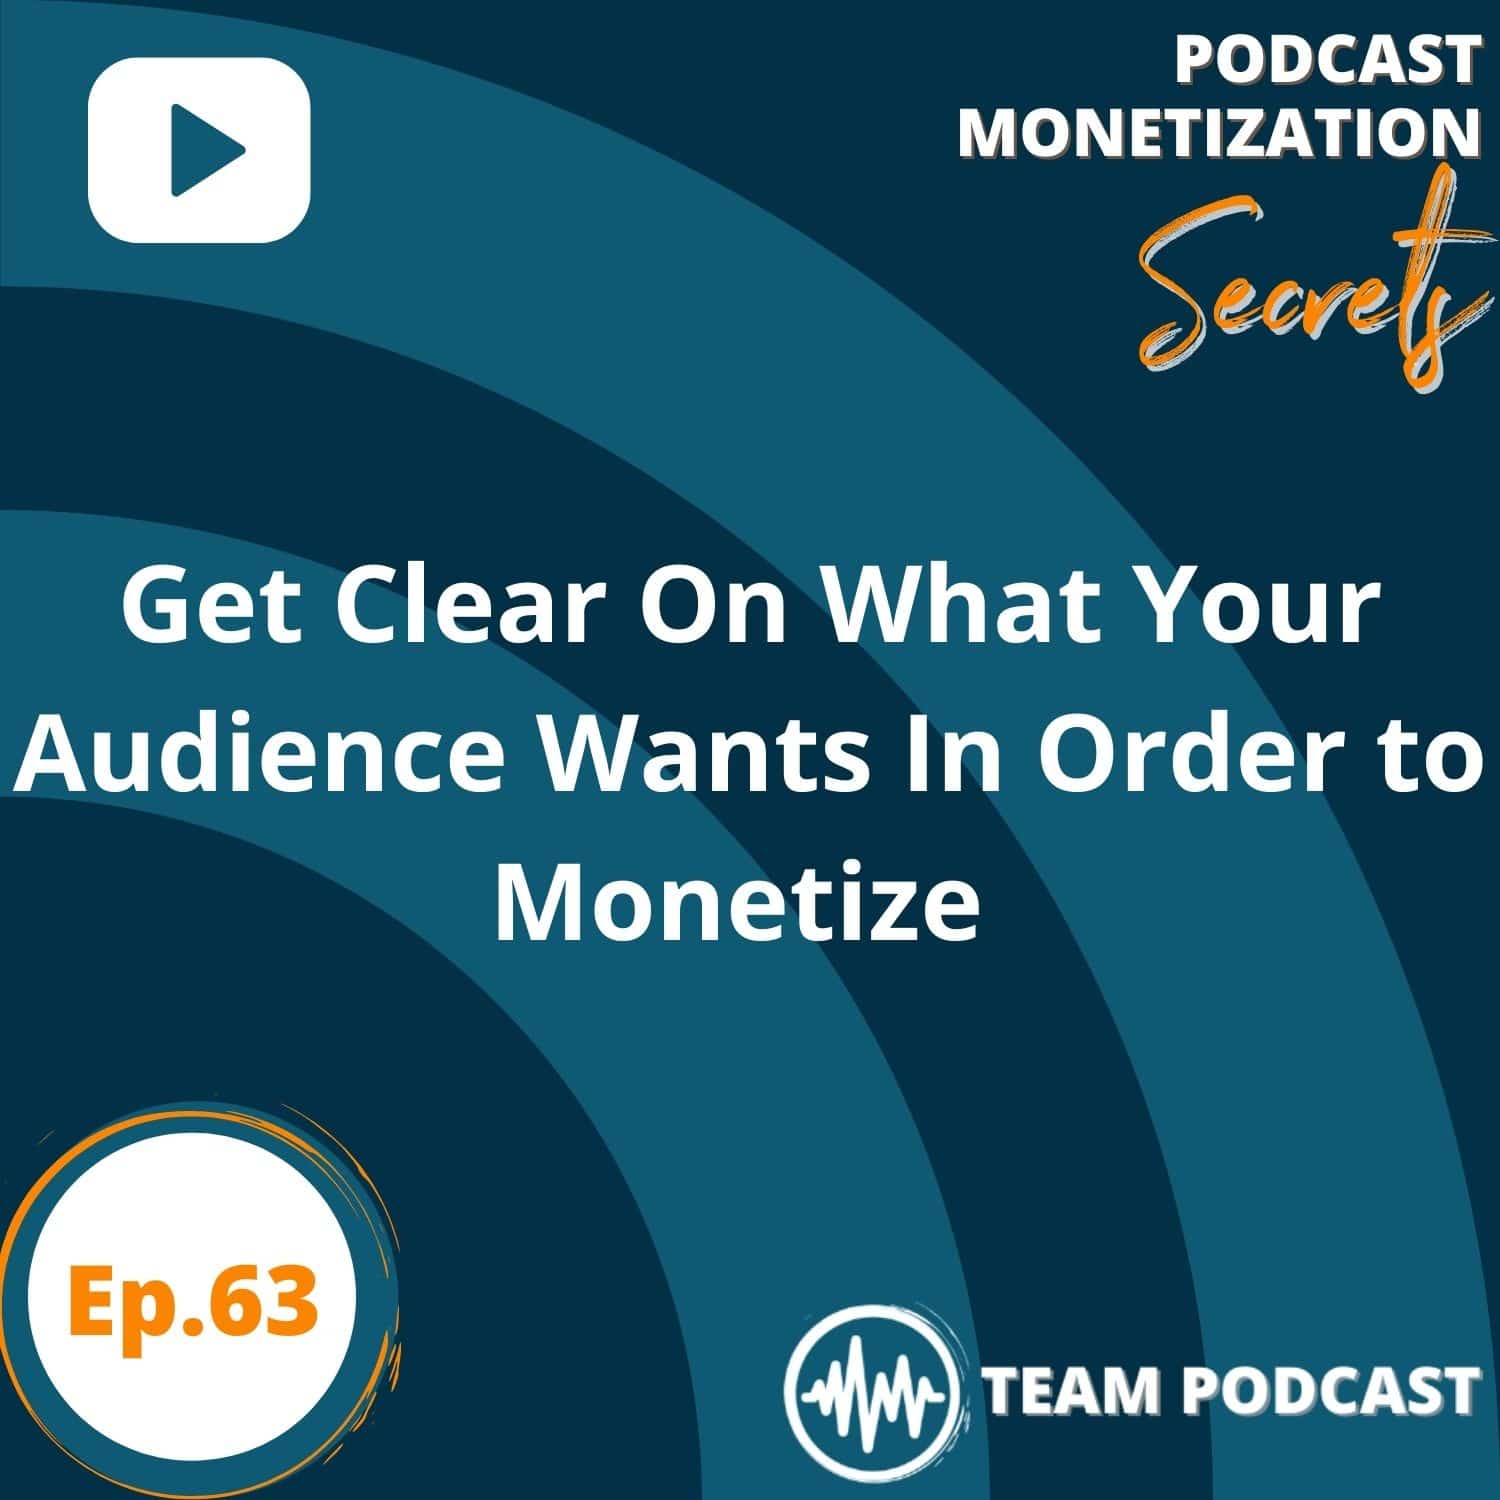 Artwork for podcast Podcast Monetization Secrets